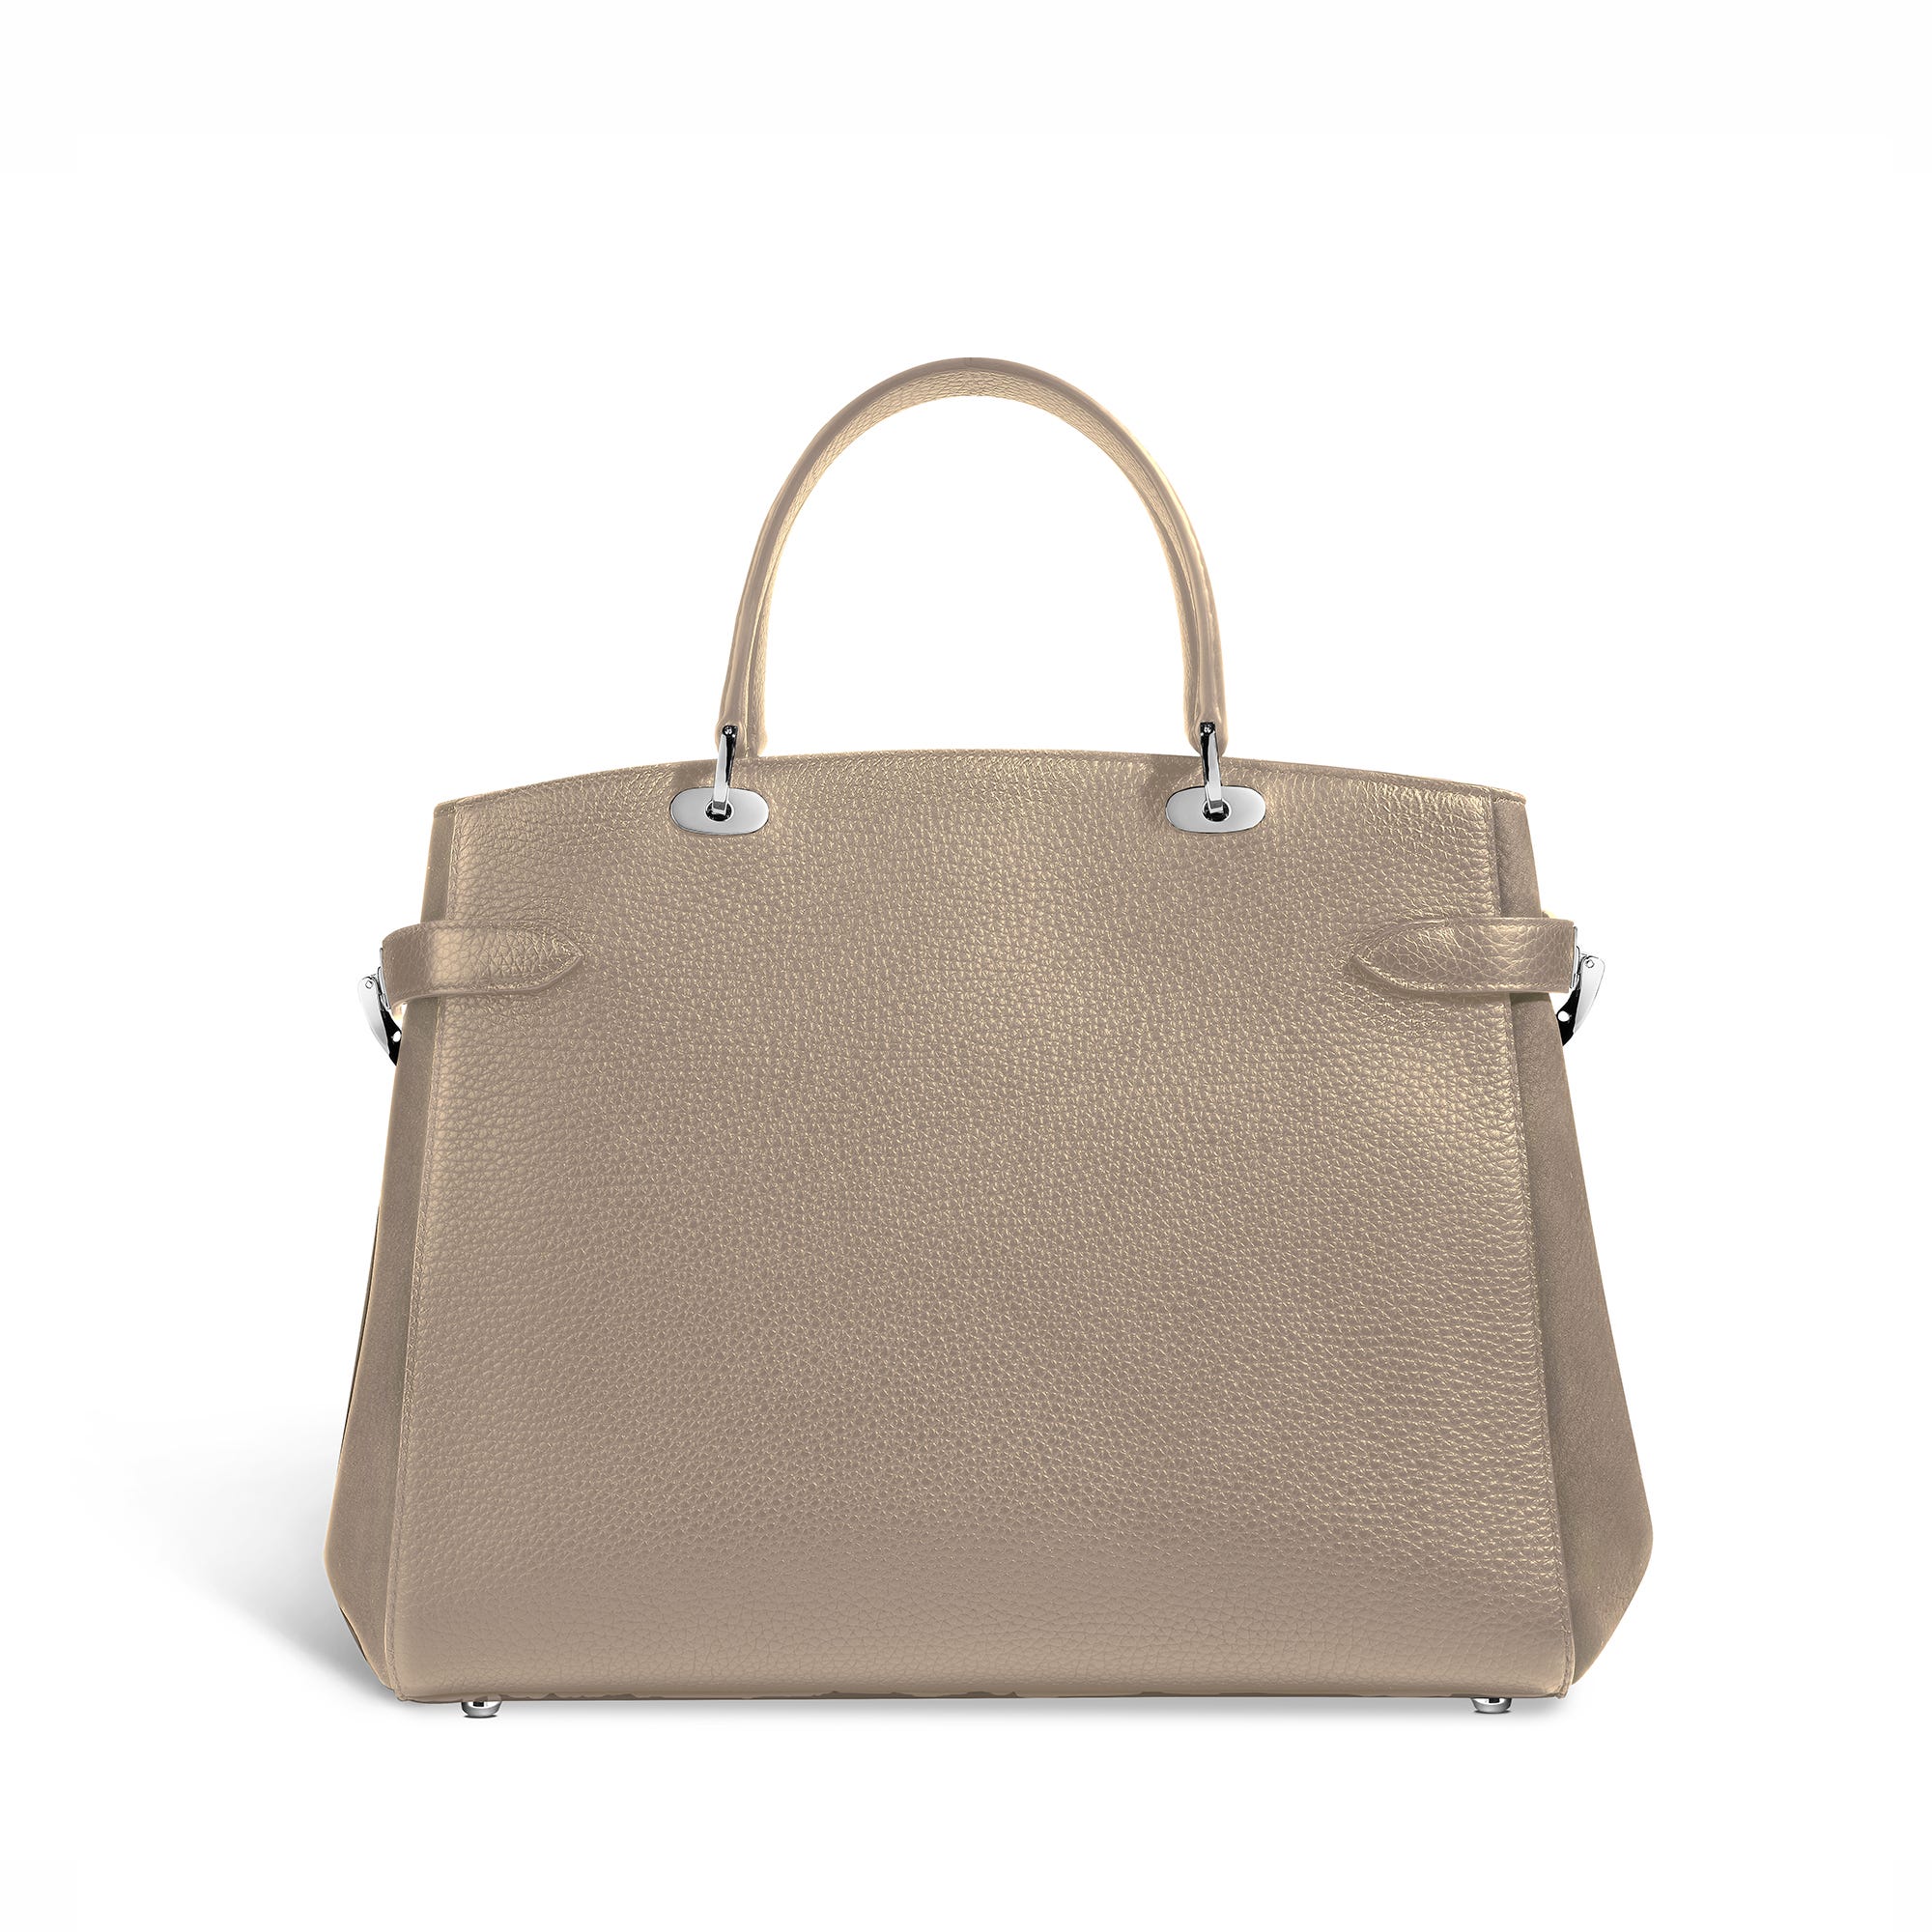 Taylor Large Handbag in Ecru Soft Grain Leather